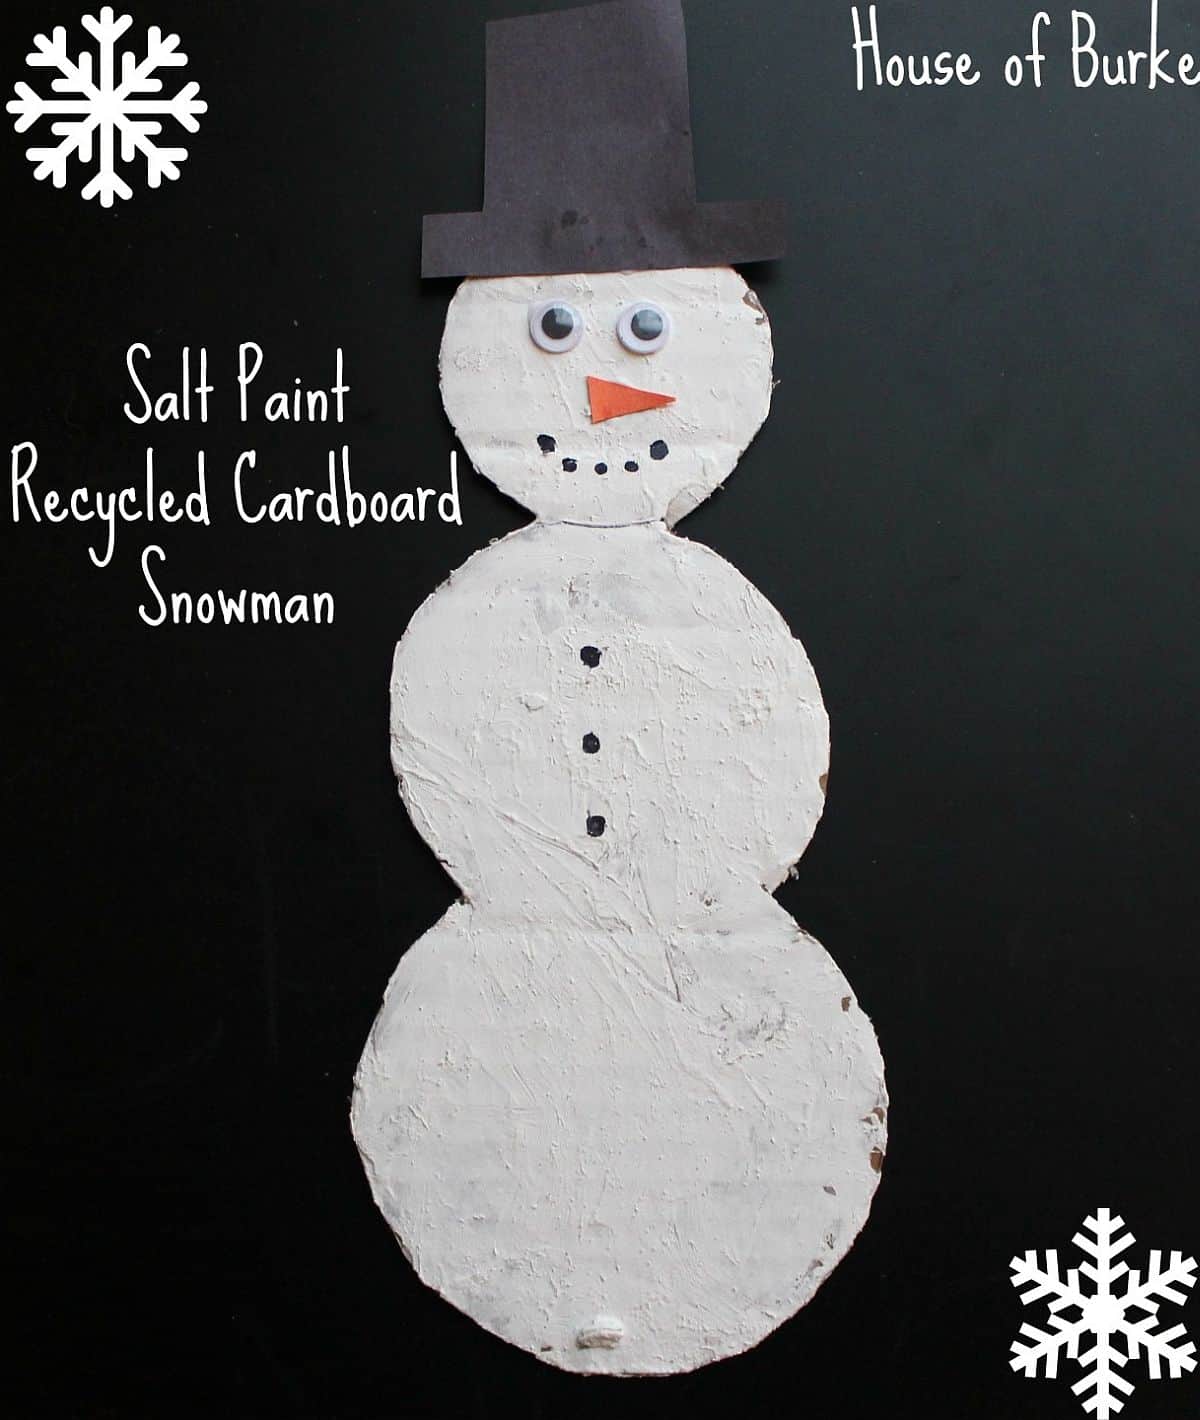 Salt Paint Recycled Cardboard Snowman